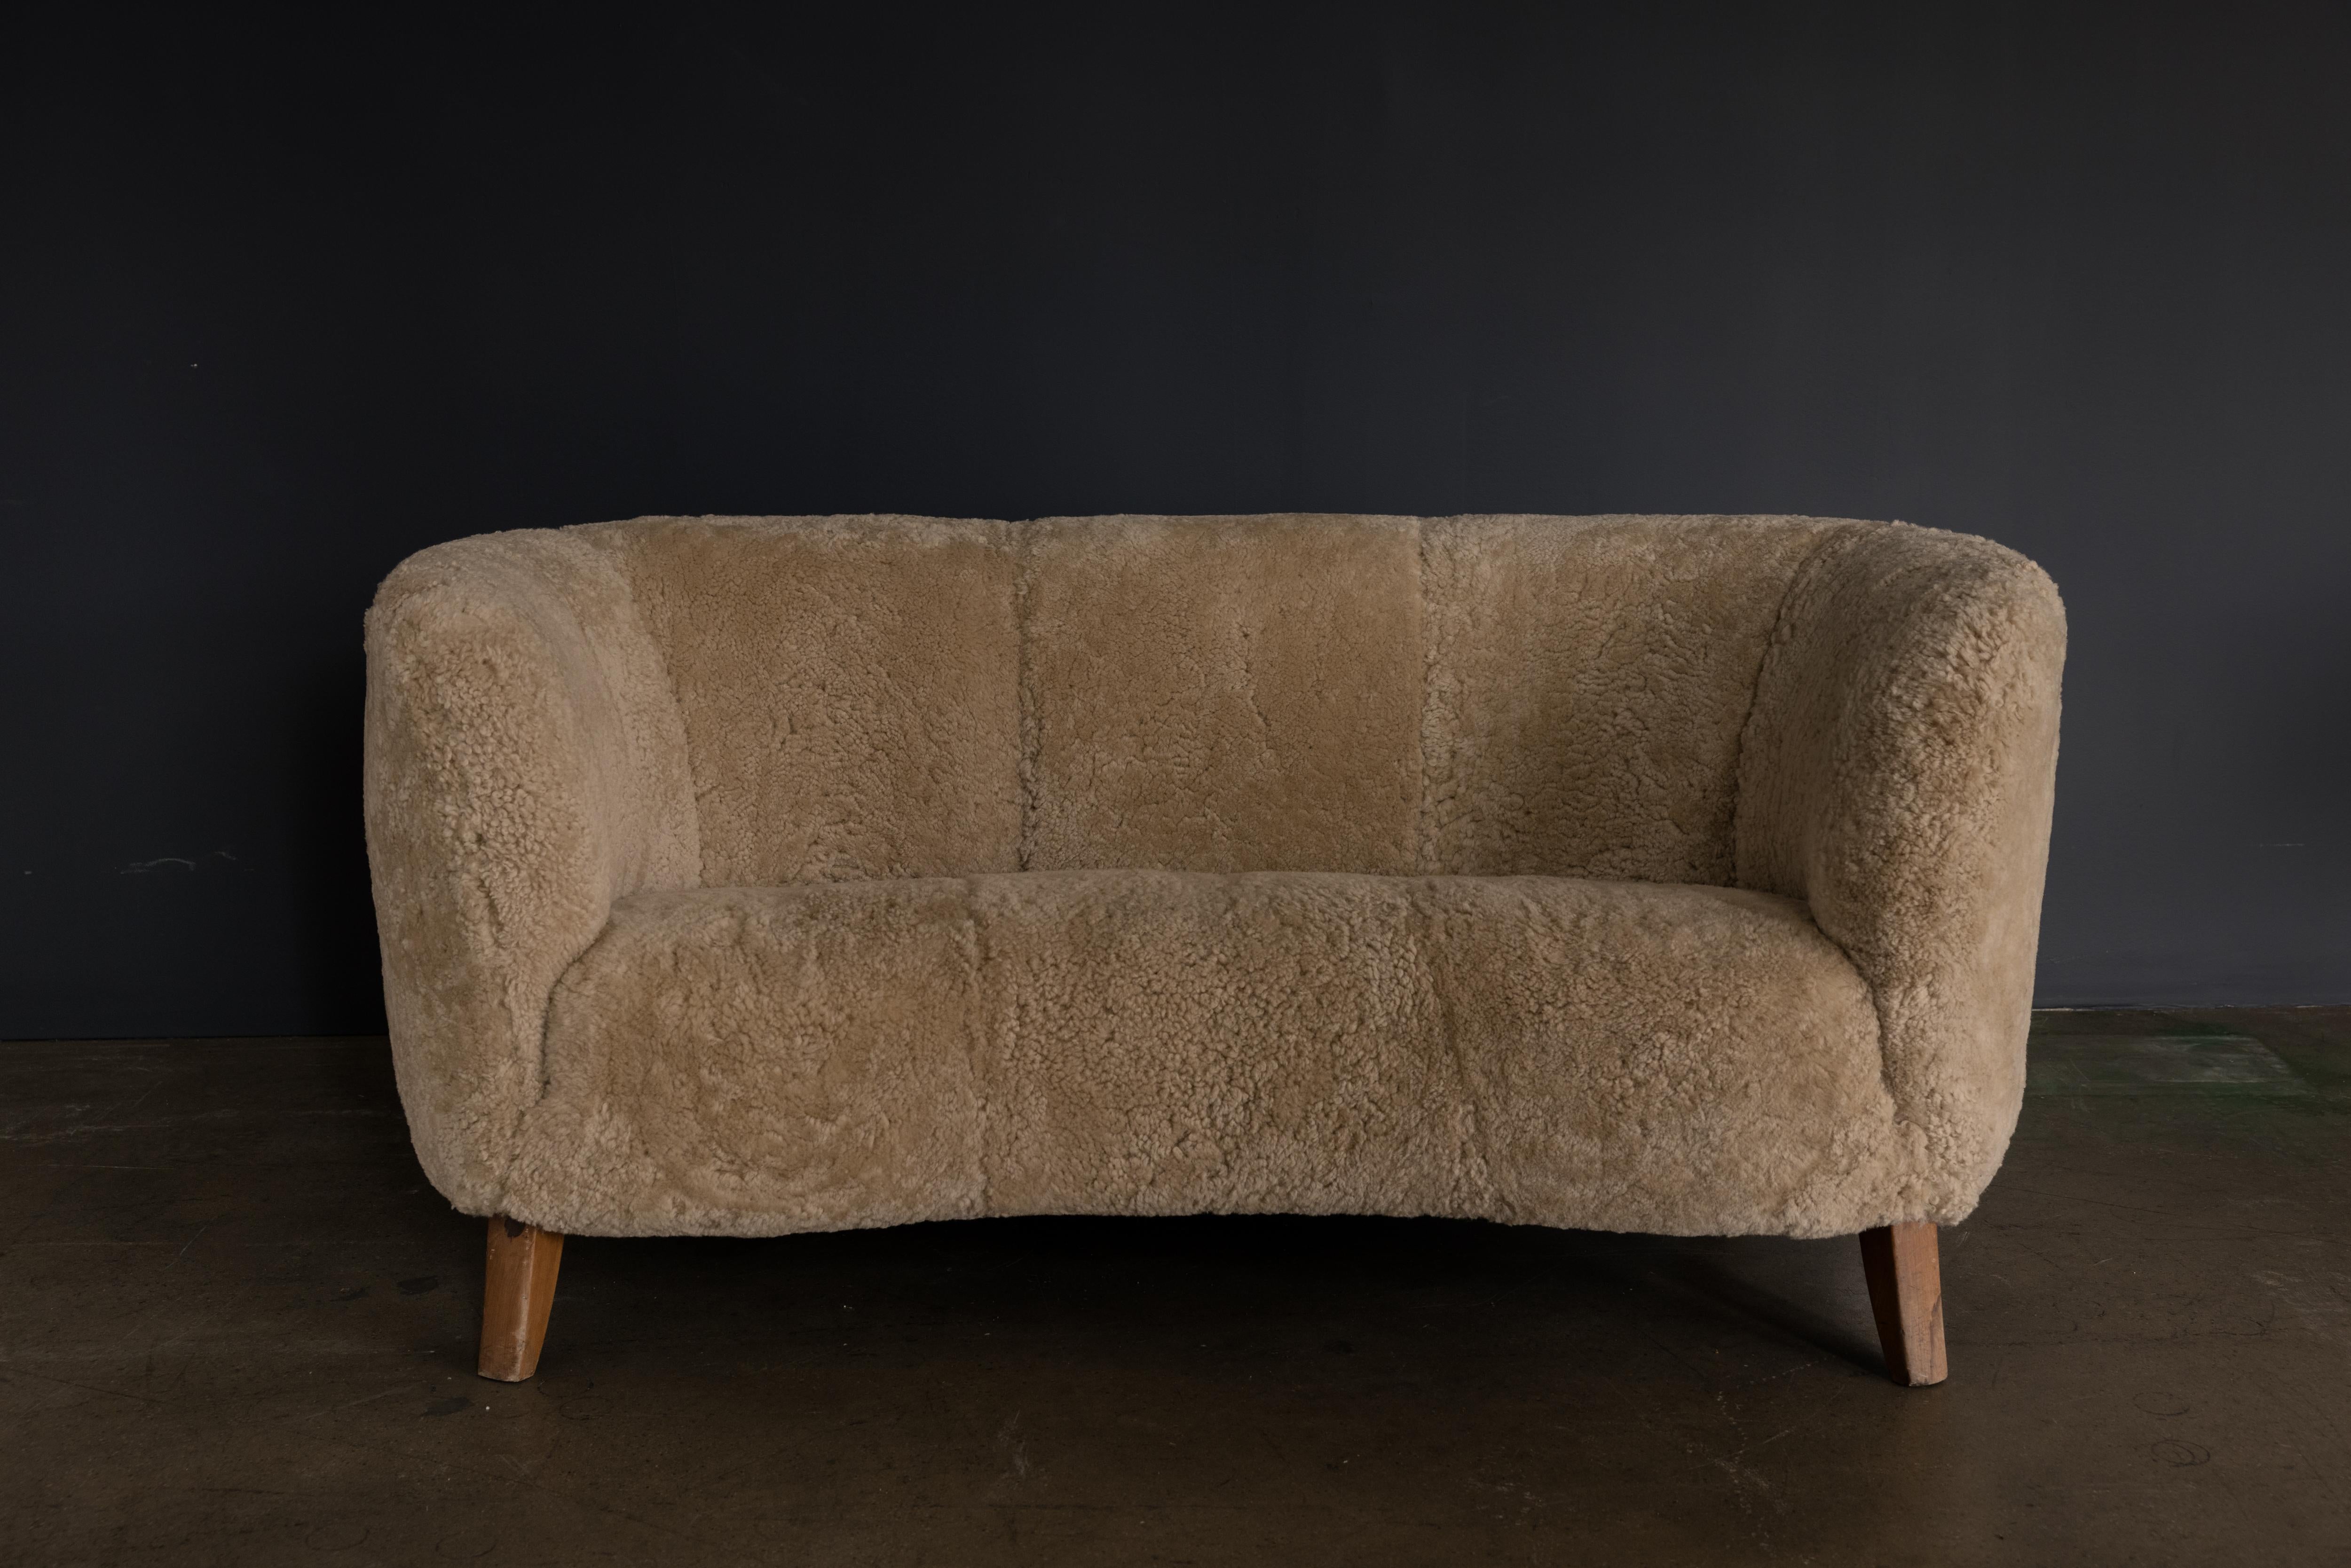 Curved Sheepskin Sofa, c. 1960's, Denmark

H 29